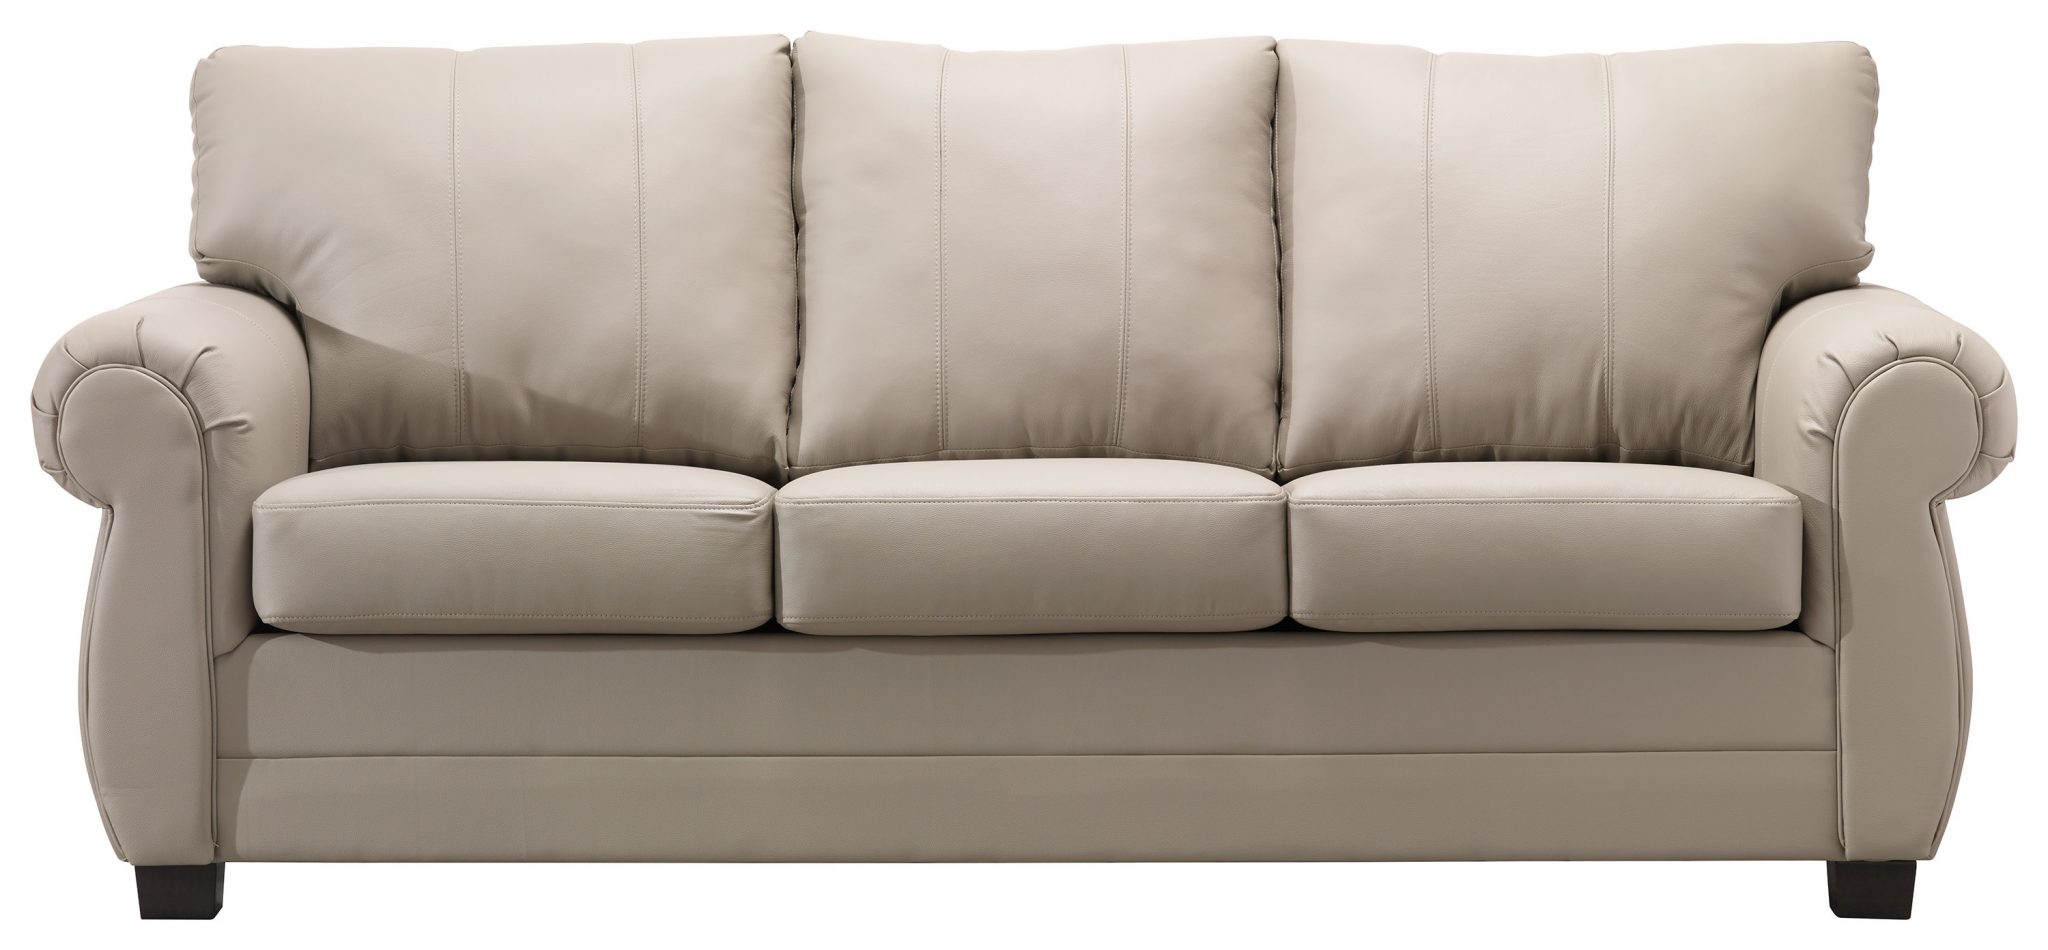 pruitts lane leather match sofa